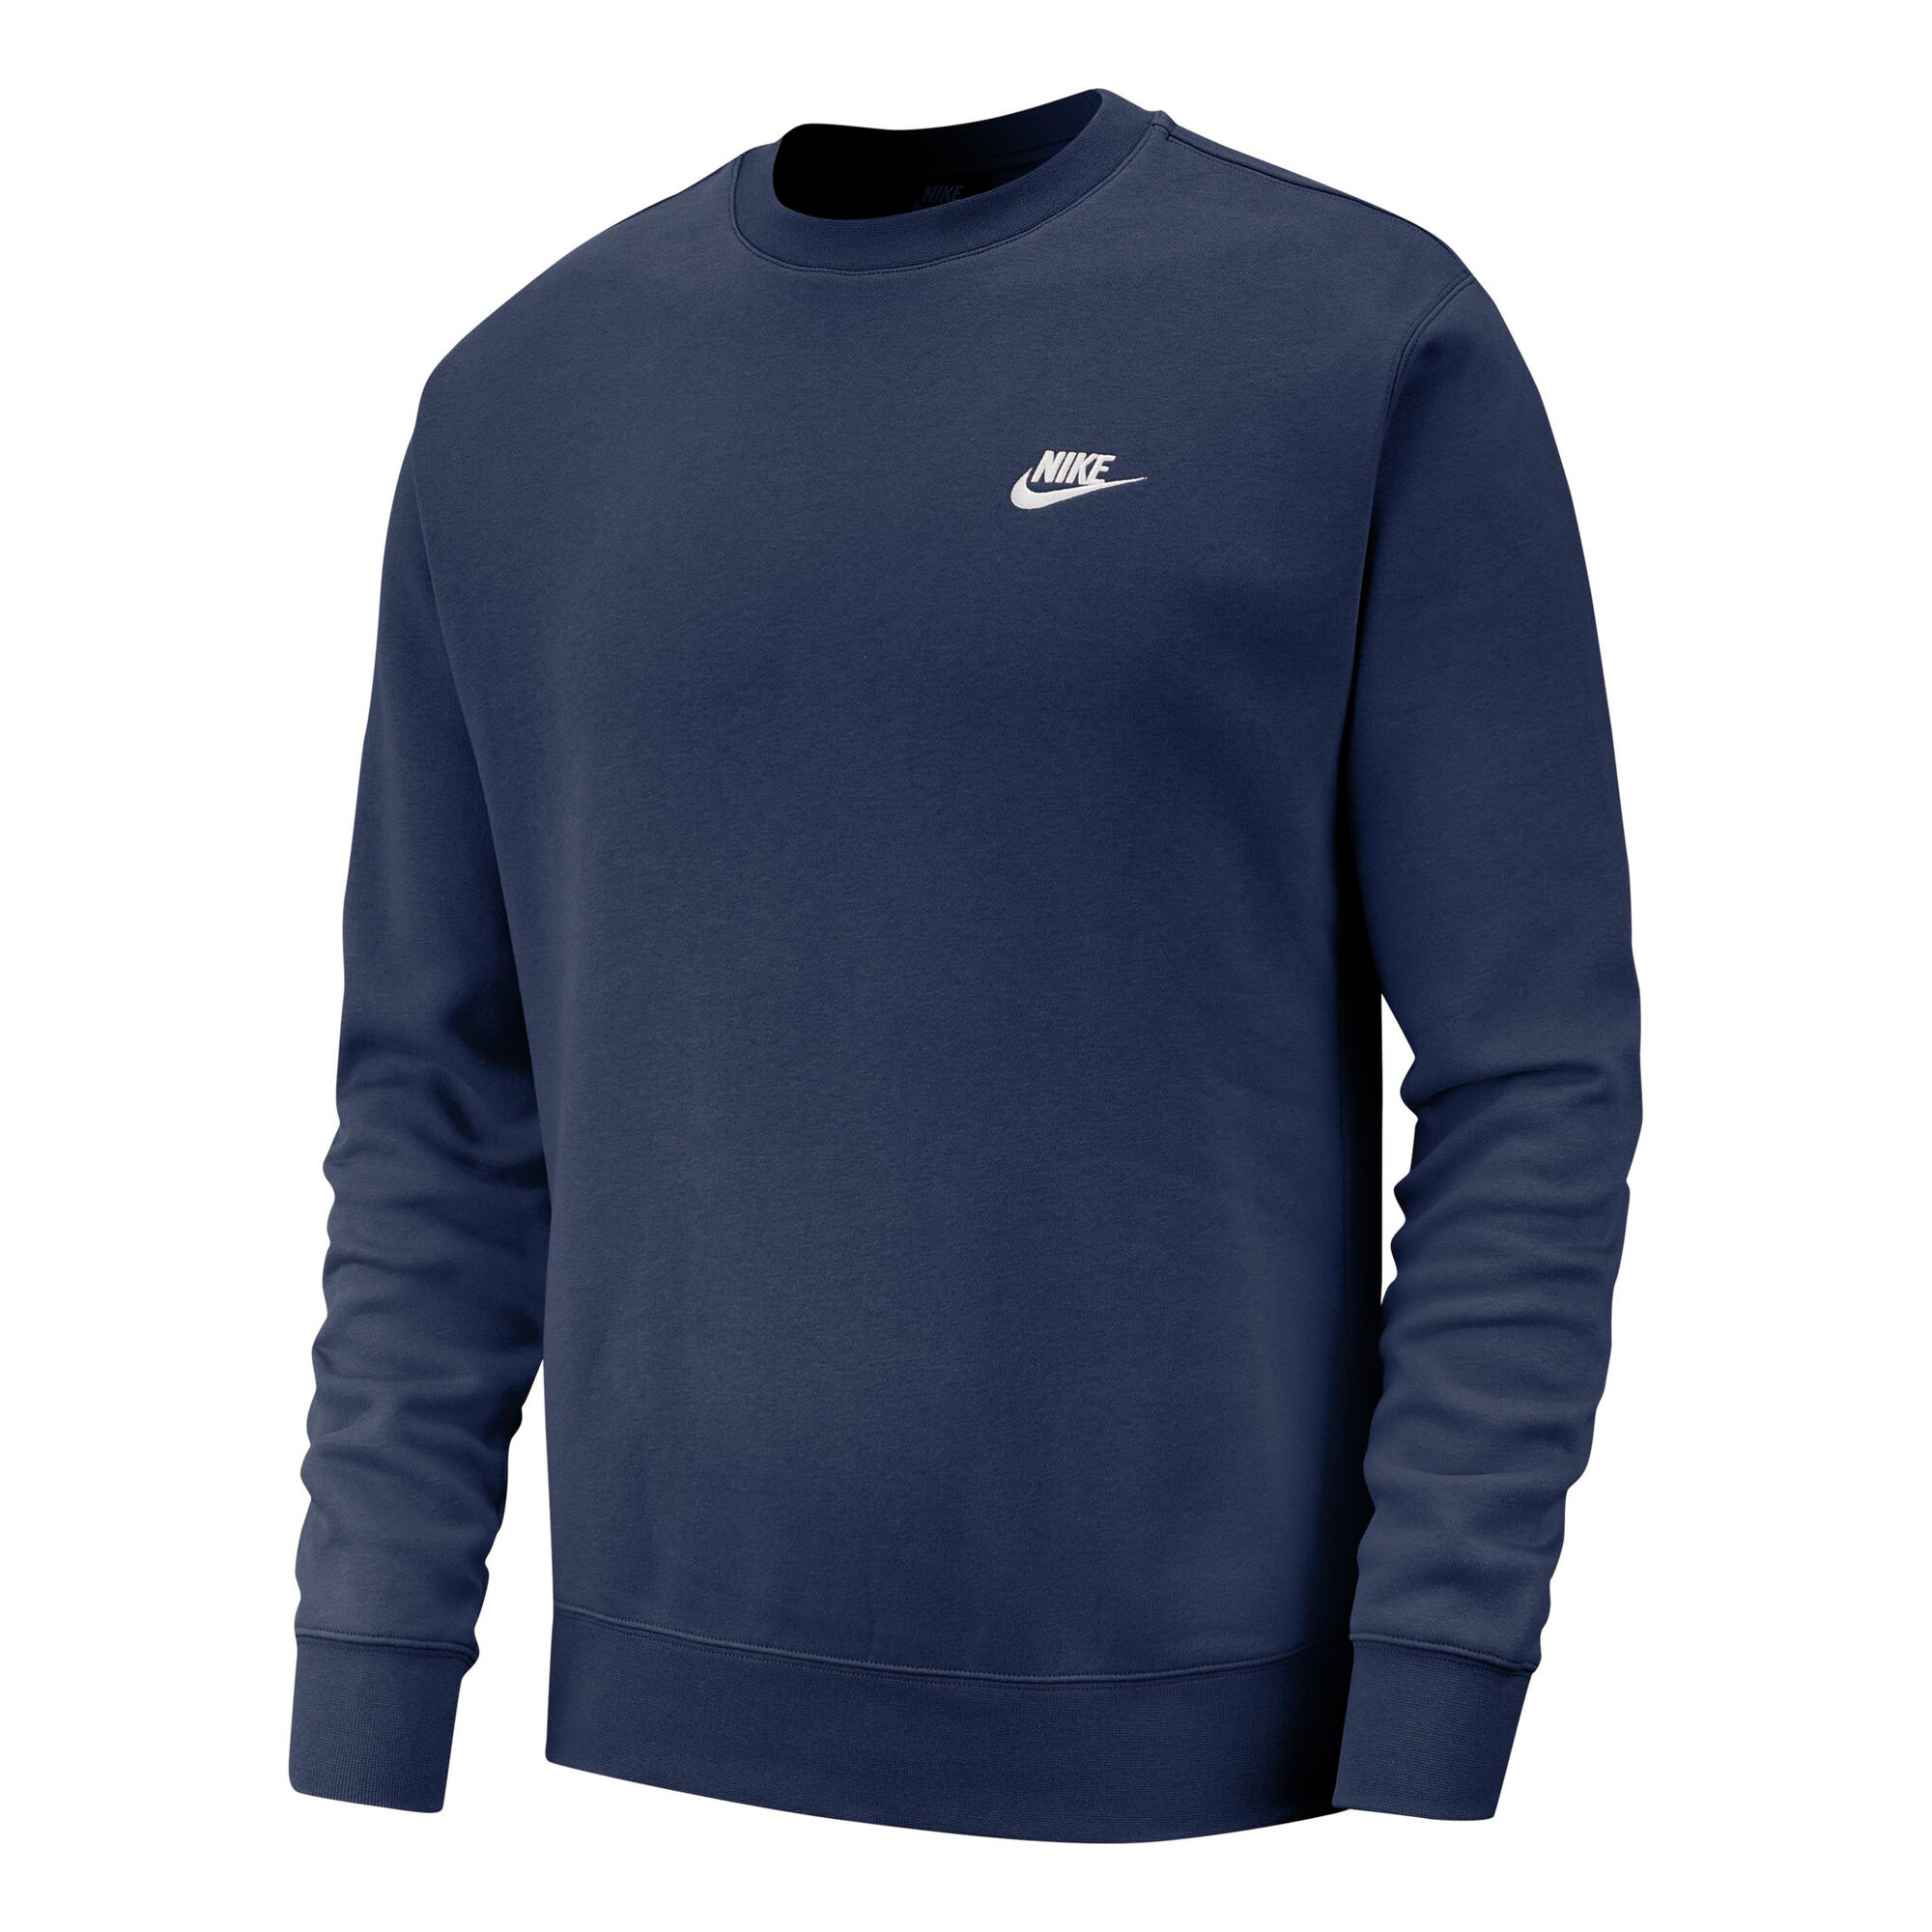 Buy Nike Sportswear Sweat-shirt Hommes Bleu Foncé online | Tennis Point FR